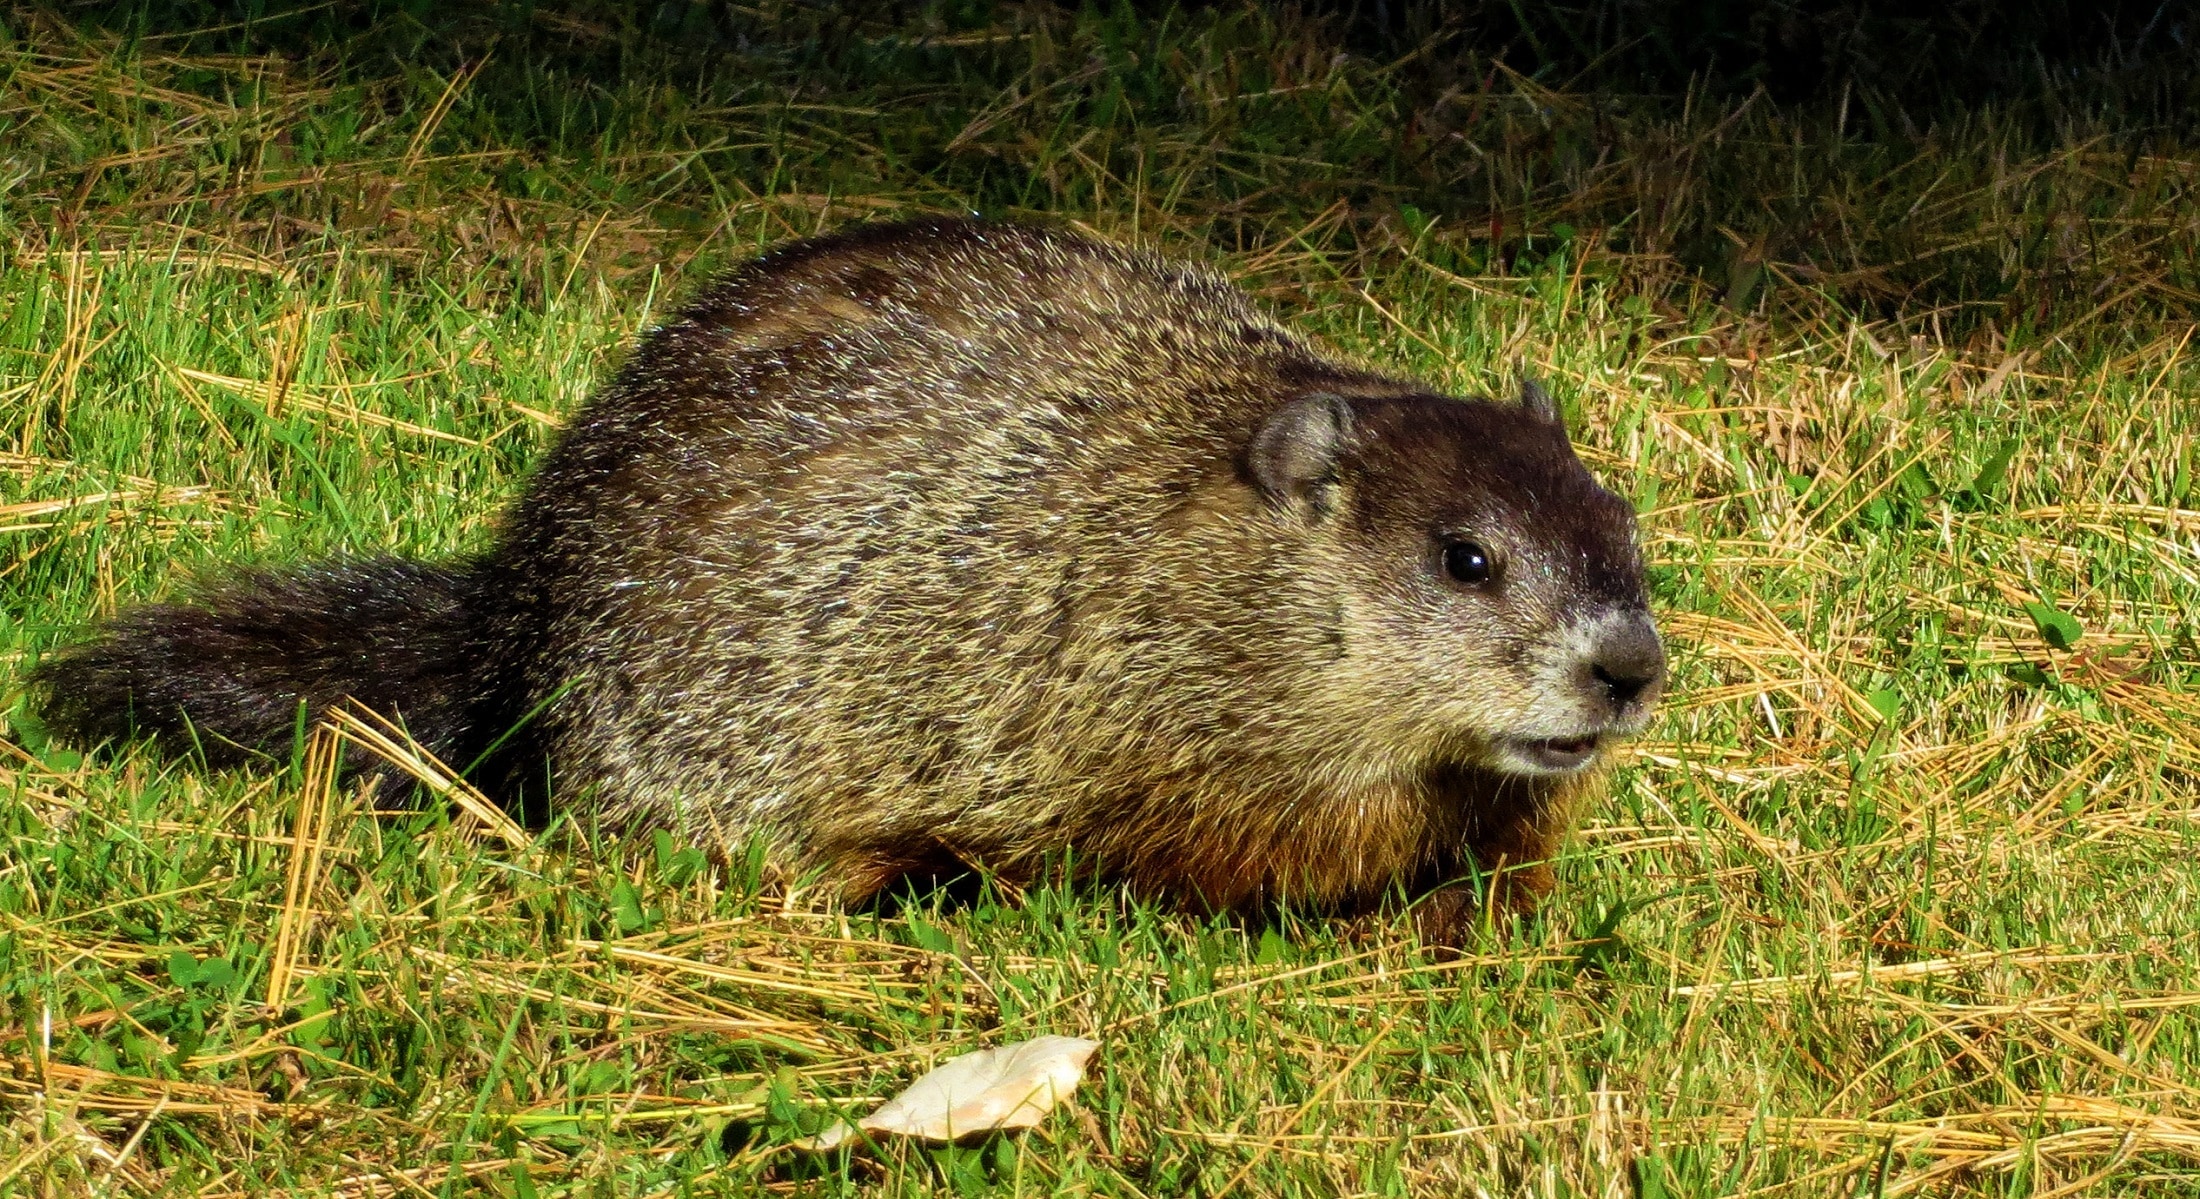 Whistlepig, Woodchuck, Groundhog, one animal, grass